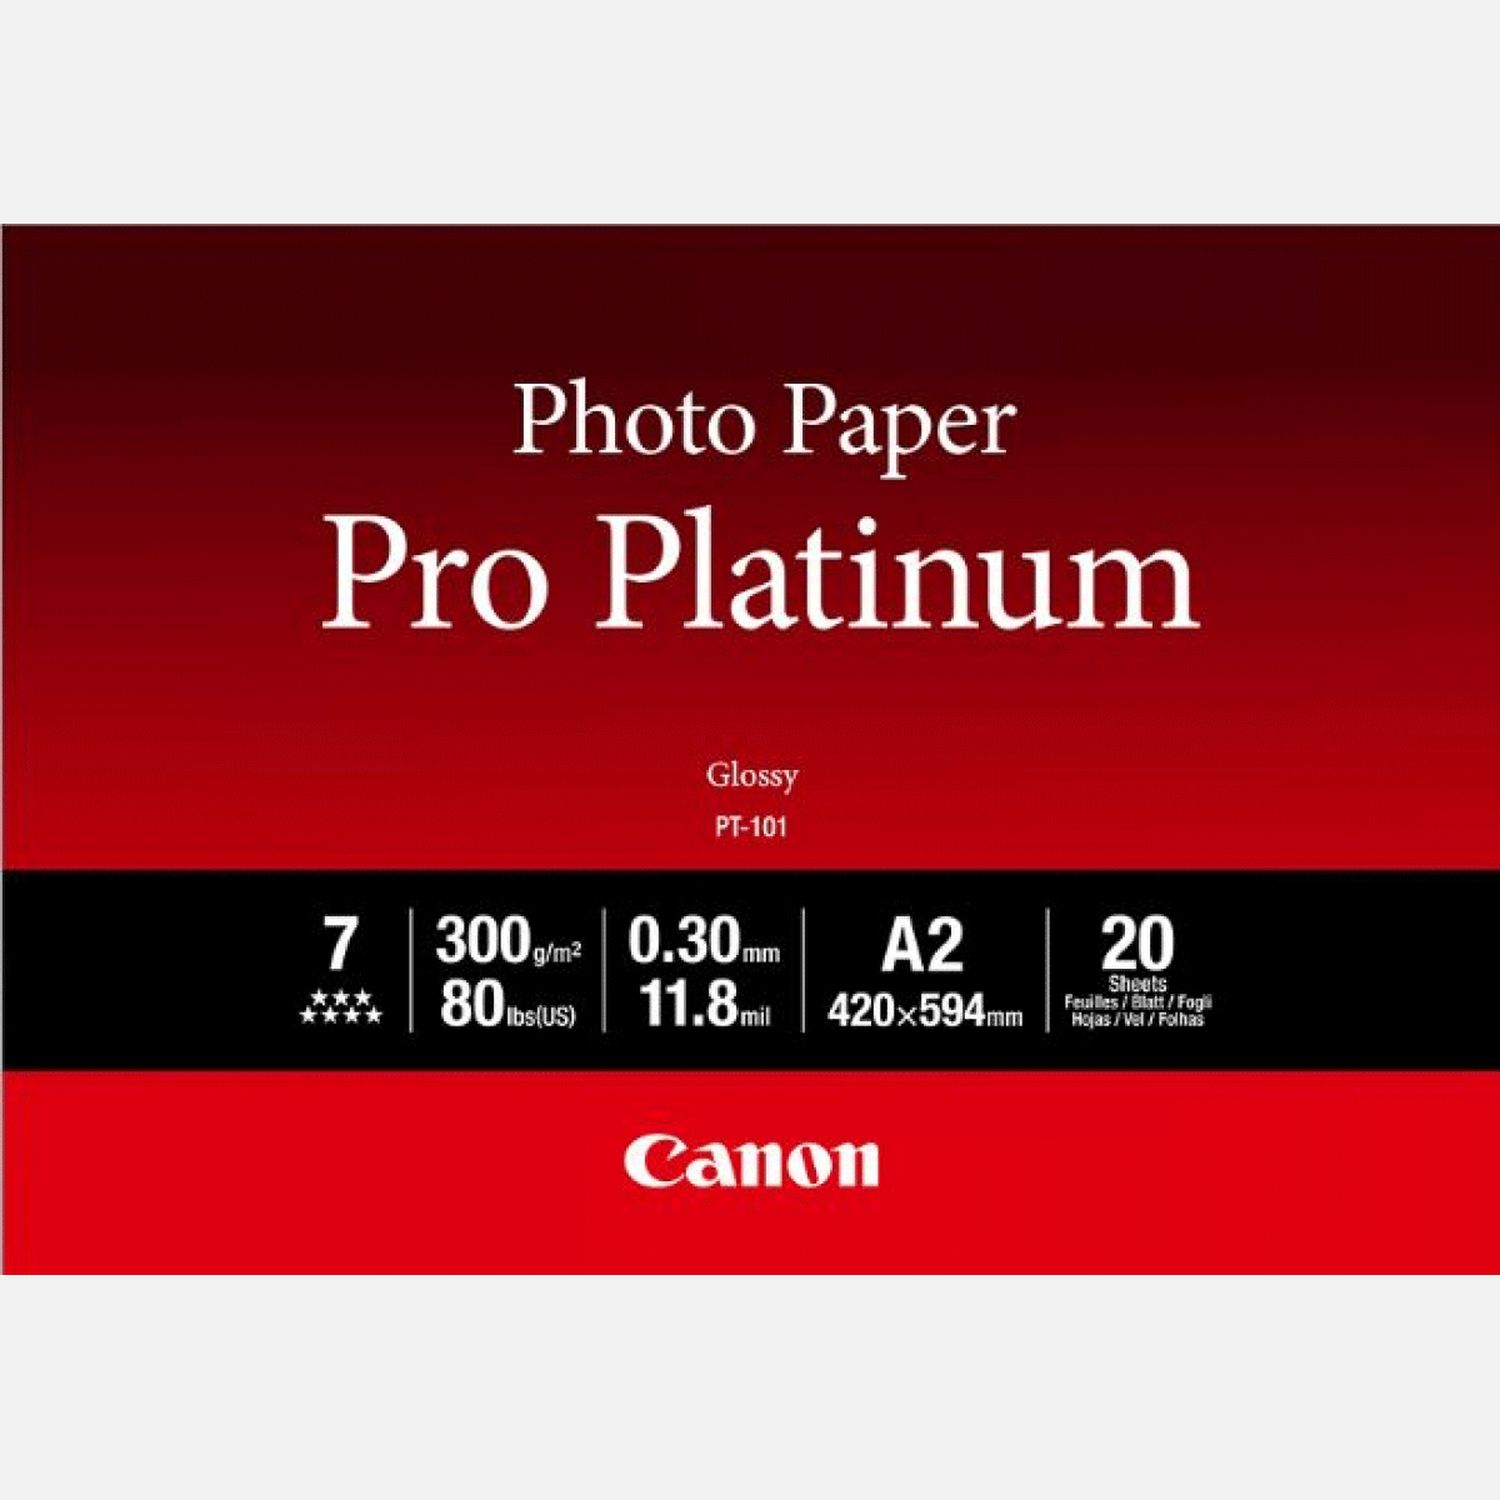 kennis Elektricien Niet essentieel Canon PT-101 Pro Platinum Photo Paper A2 - 20 vel in Fotopapier — Canon  Belgie Store